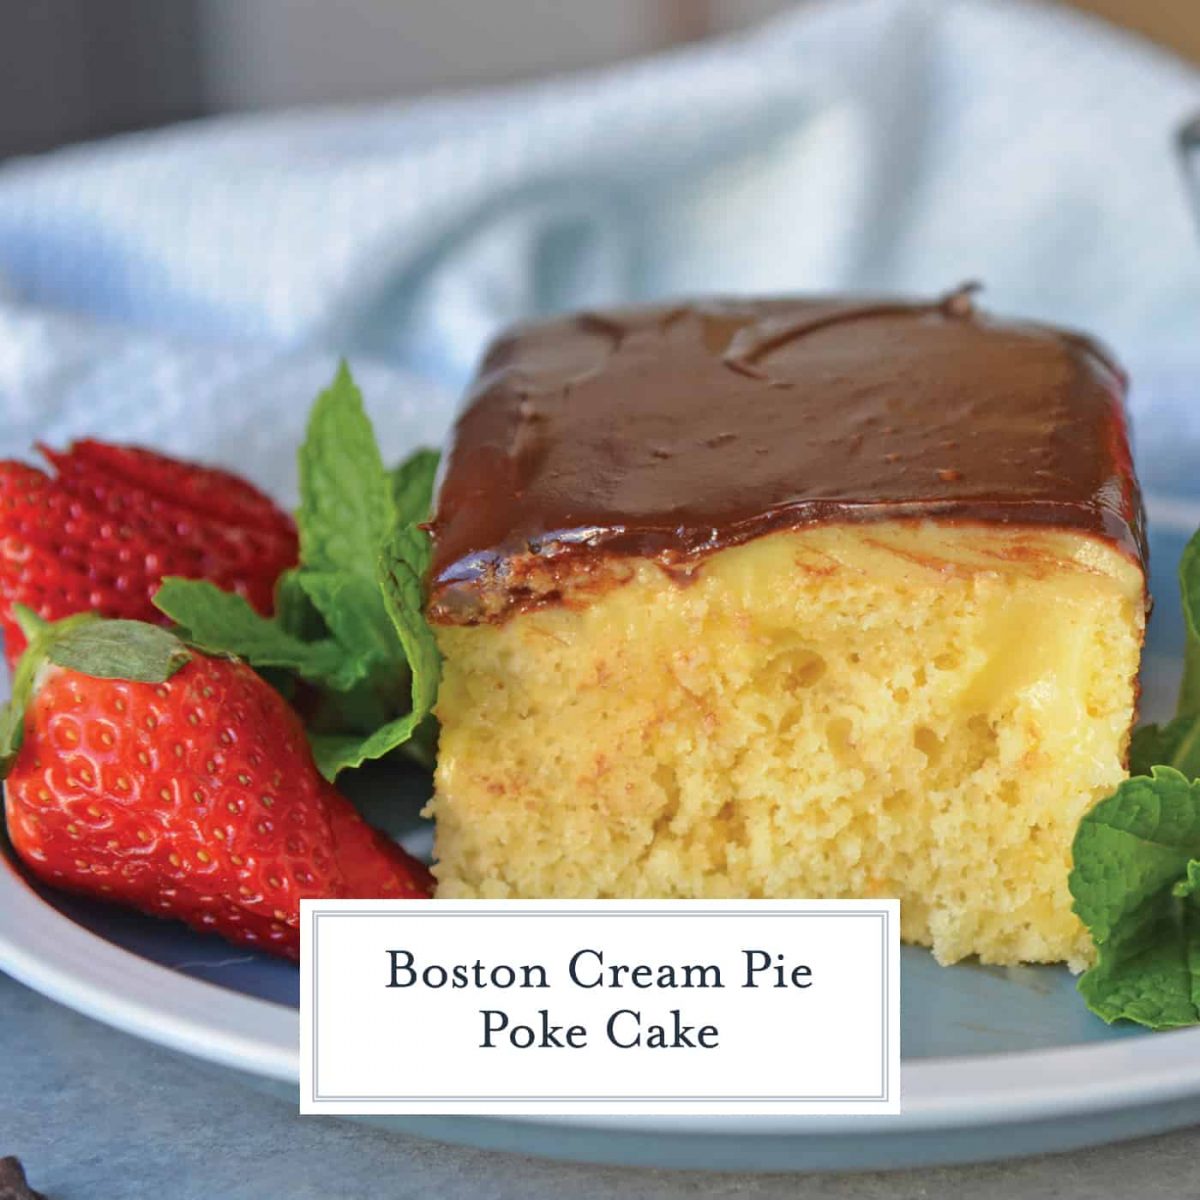 Piece of Boston Cream Poke Cake with strawberry garnish